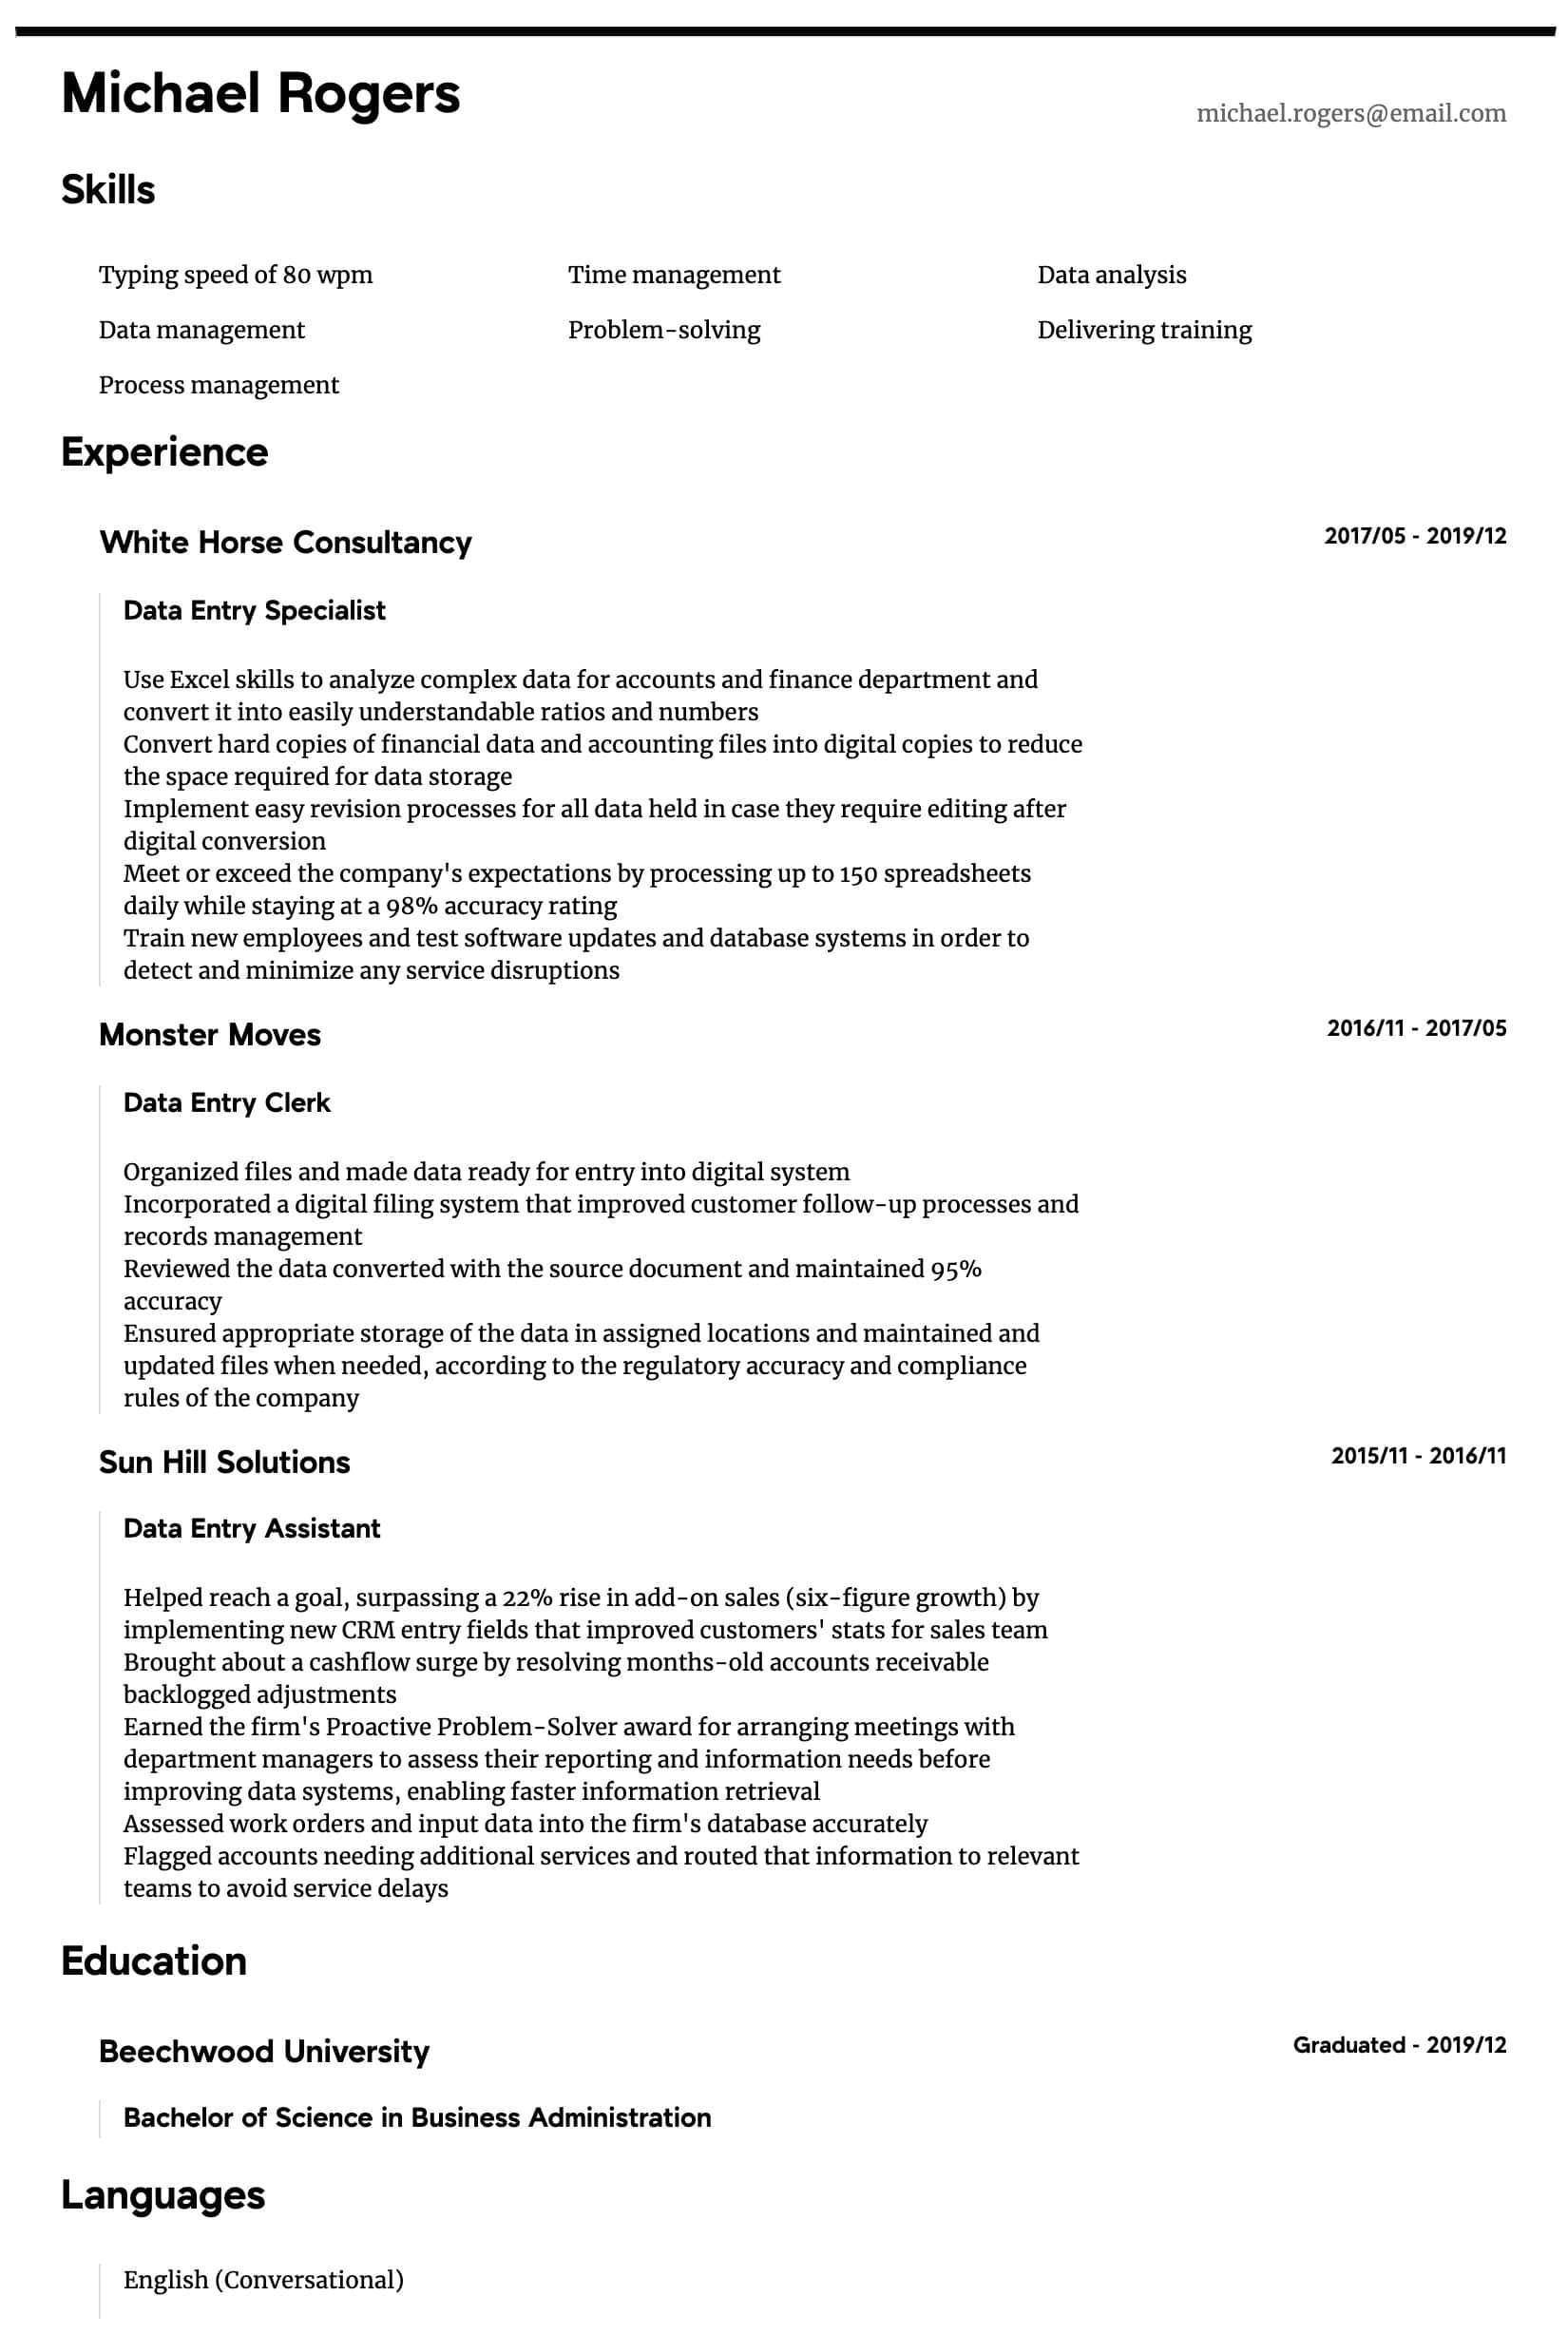 Sample Resume for Data Entry Position Data Entry Resume Samples All Experience Levels Resume.com …